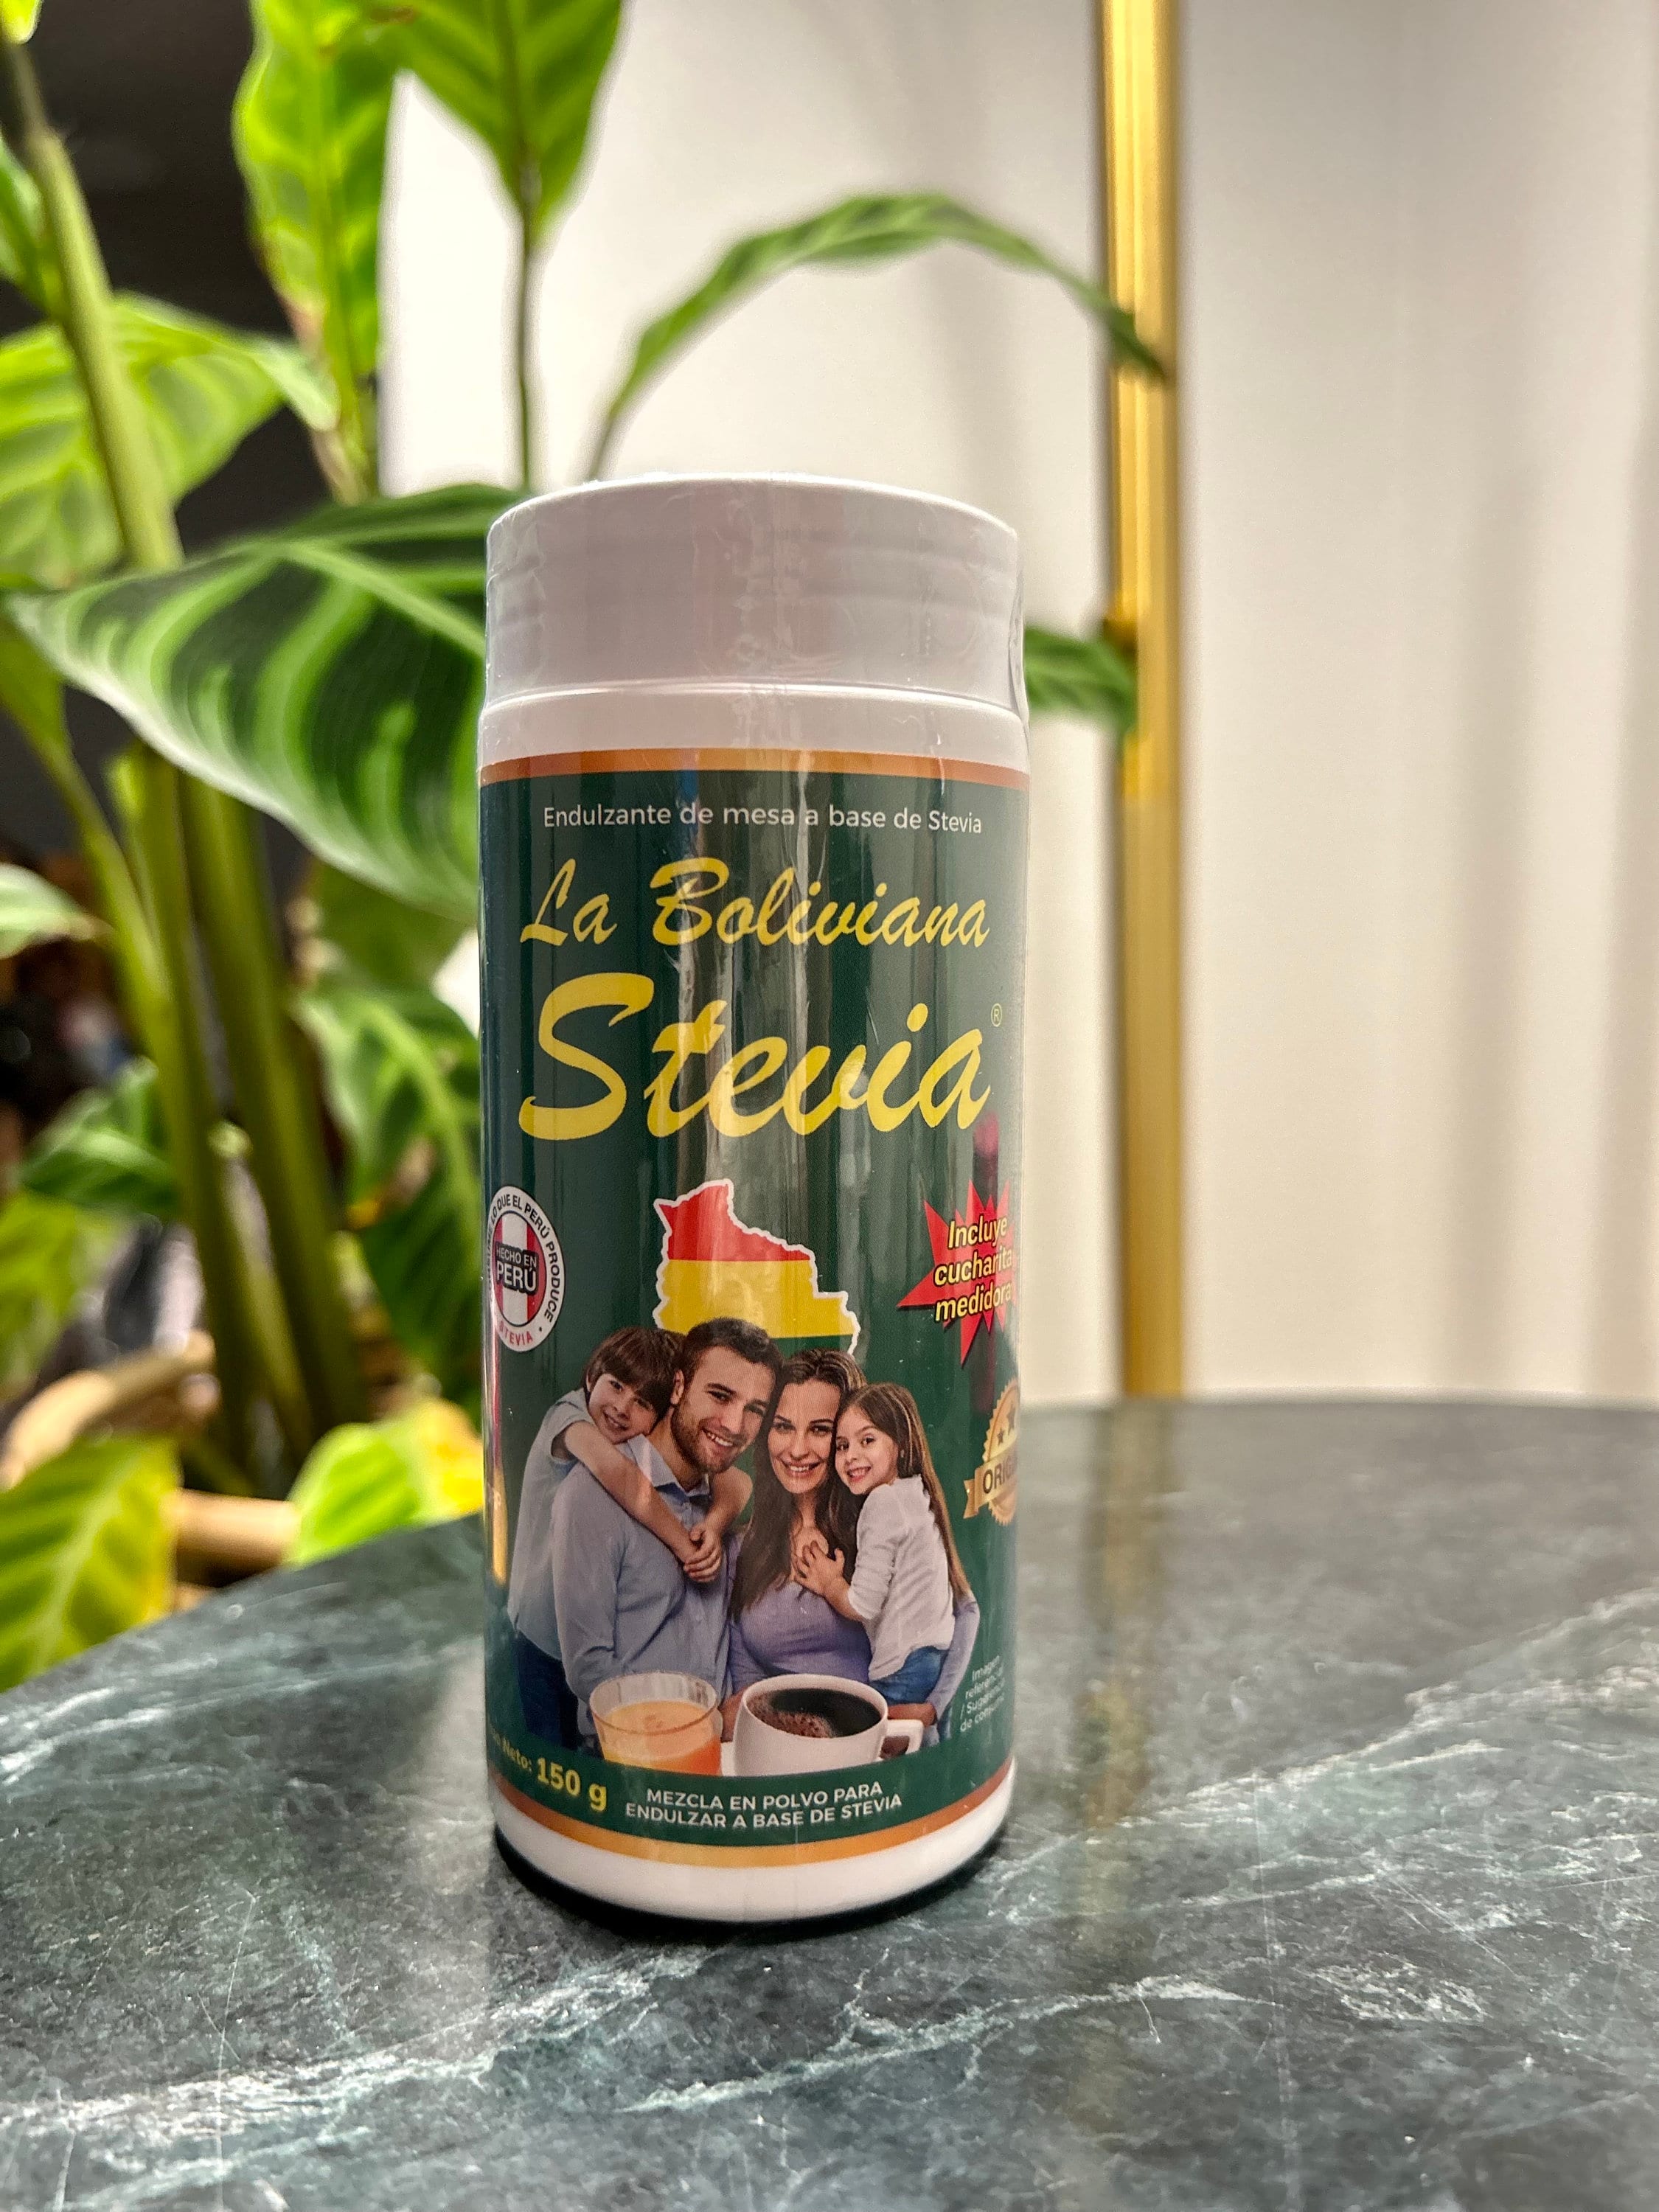 Stevia Drops Nature - Steviala